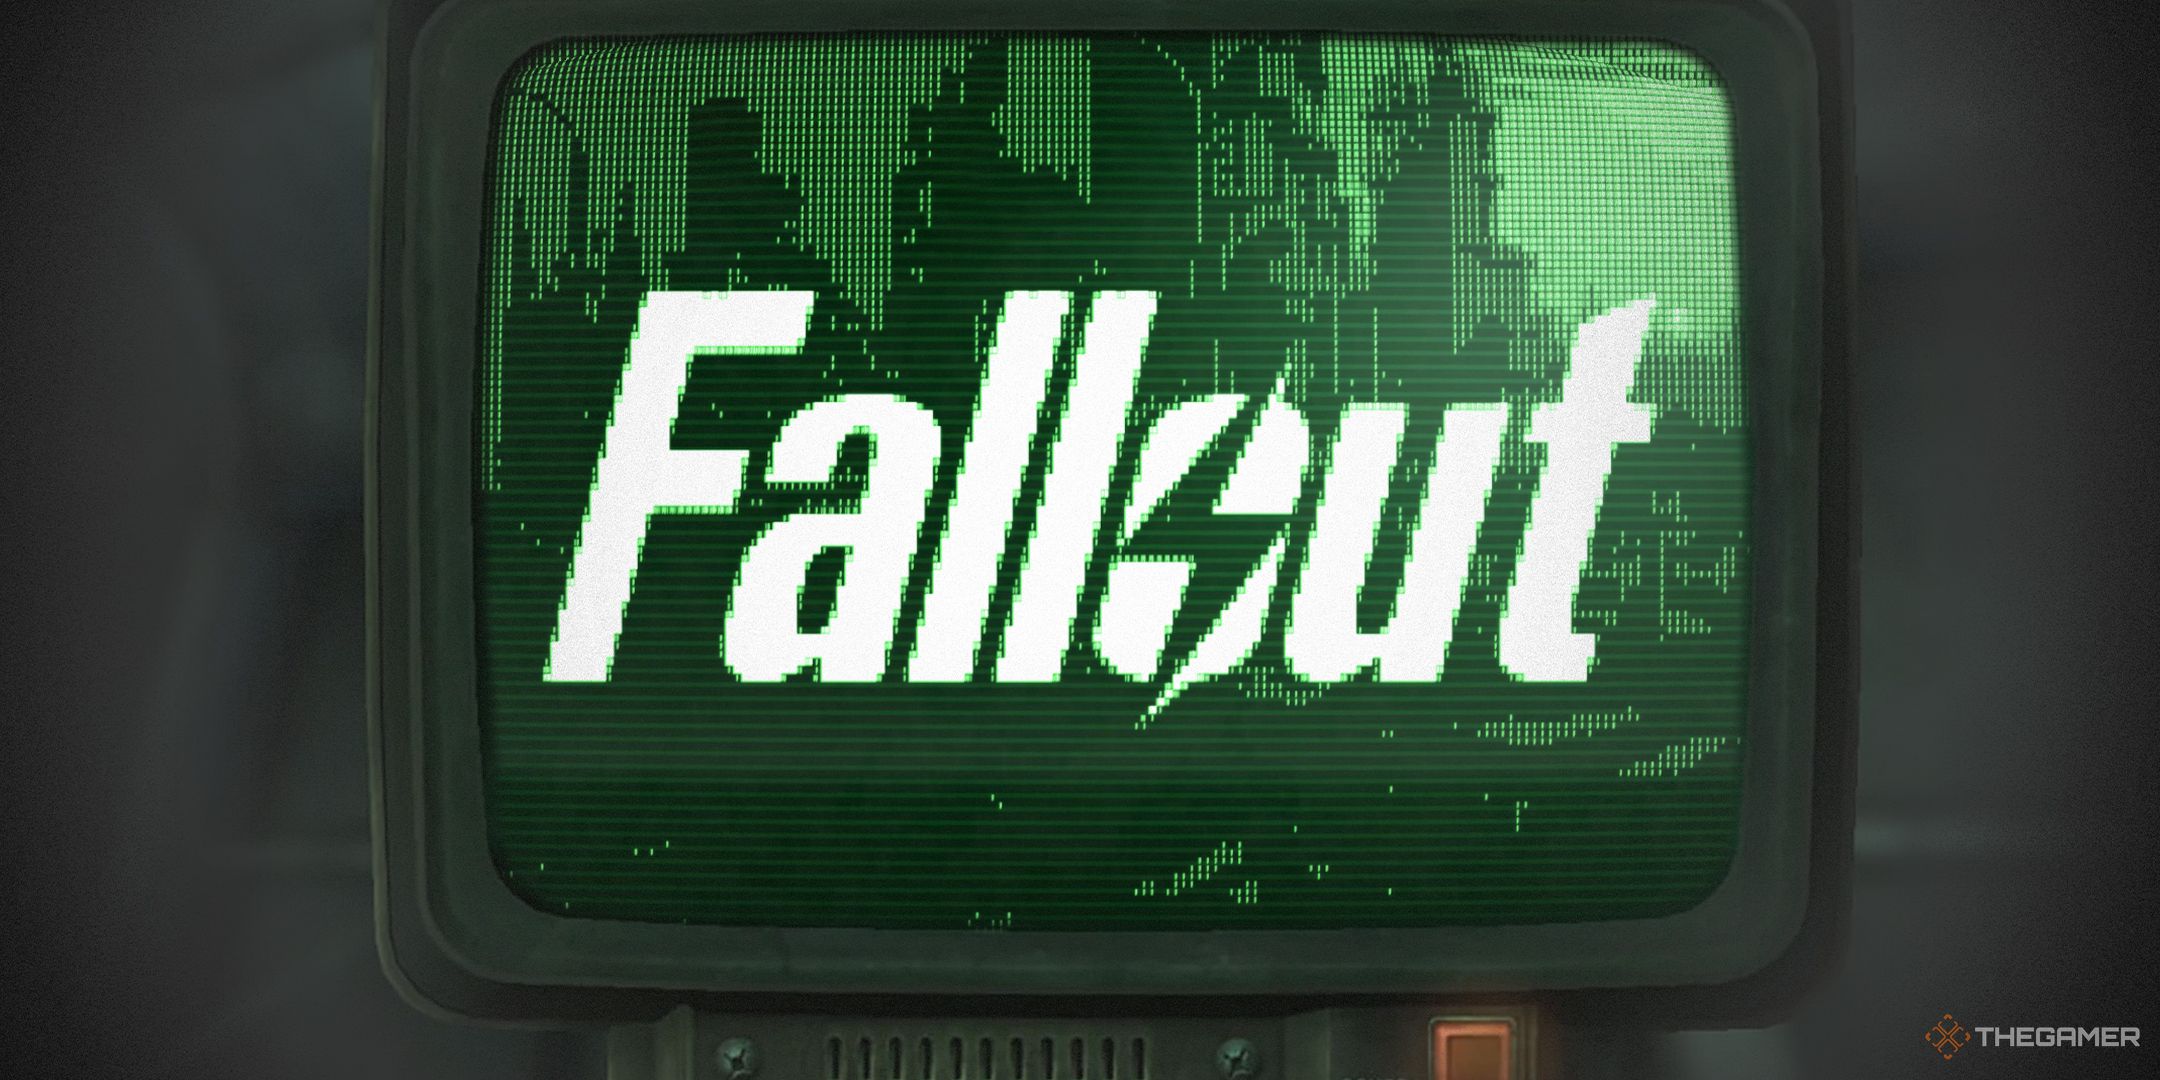 NEWS Fallout logo over Necropolis in green CRT filter on a terminal